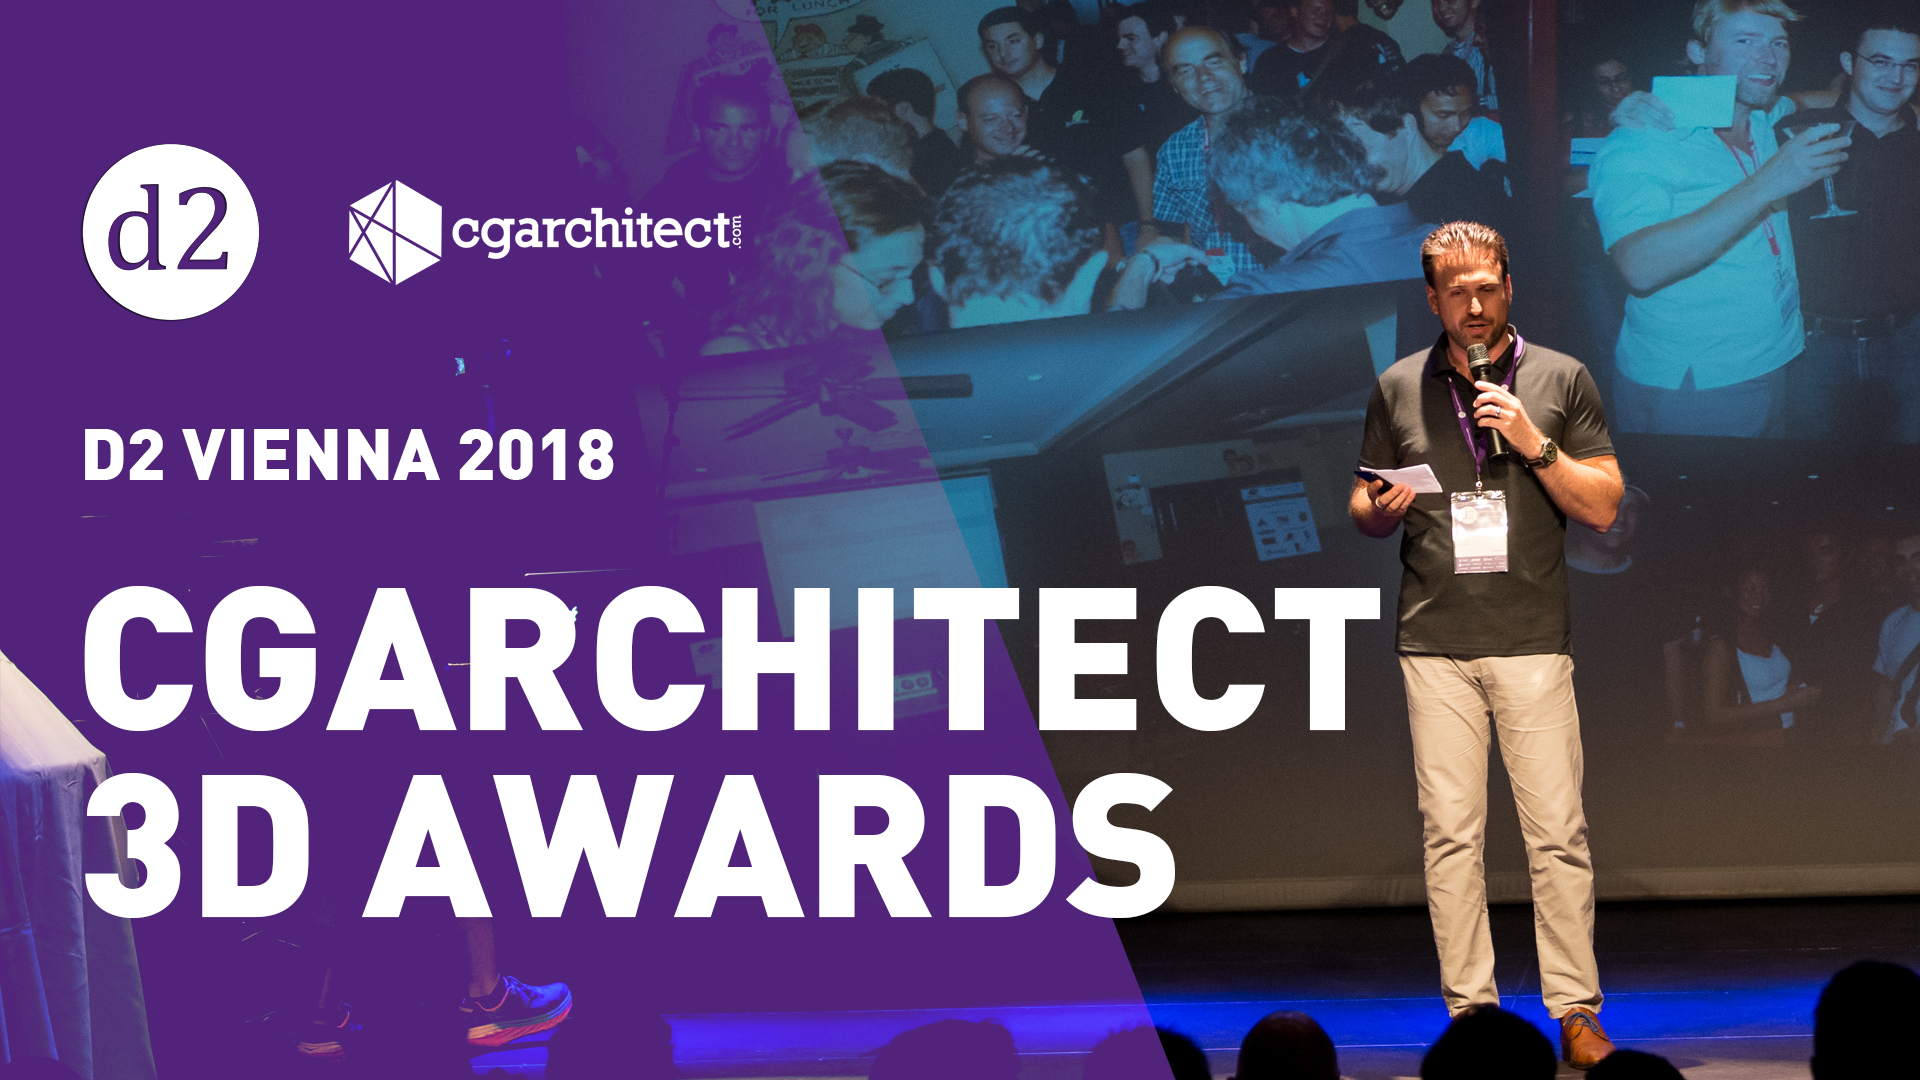 D2 Vienna 2018: Jeff Mottle Presents the CGArchitect 3D Awards